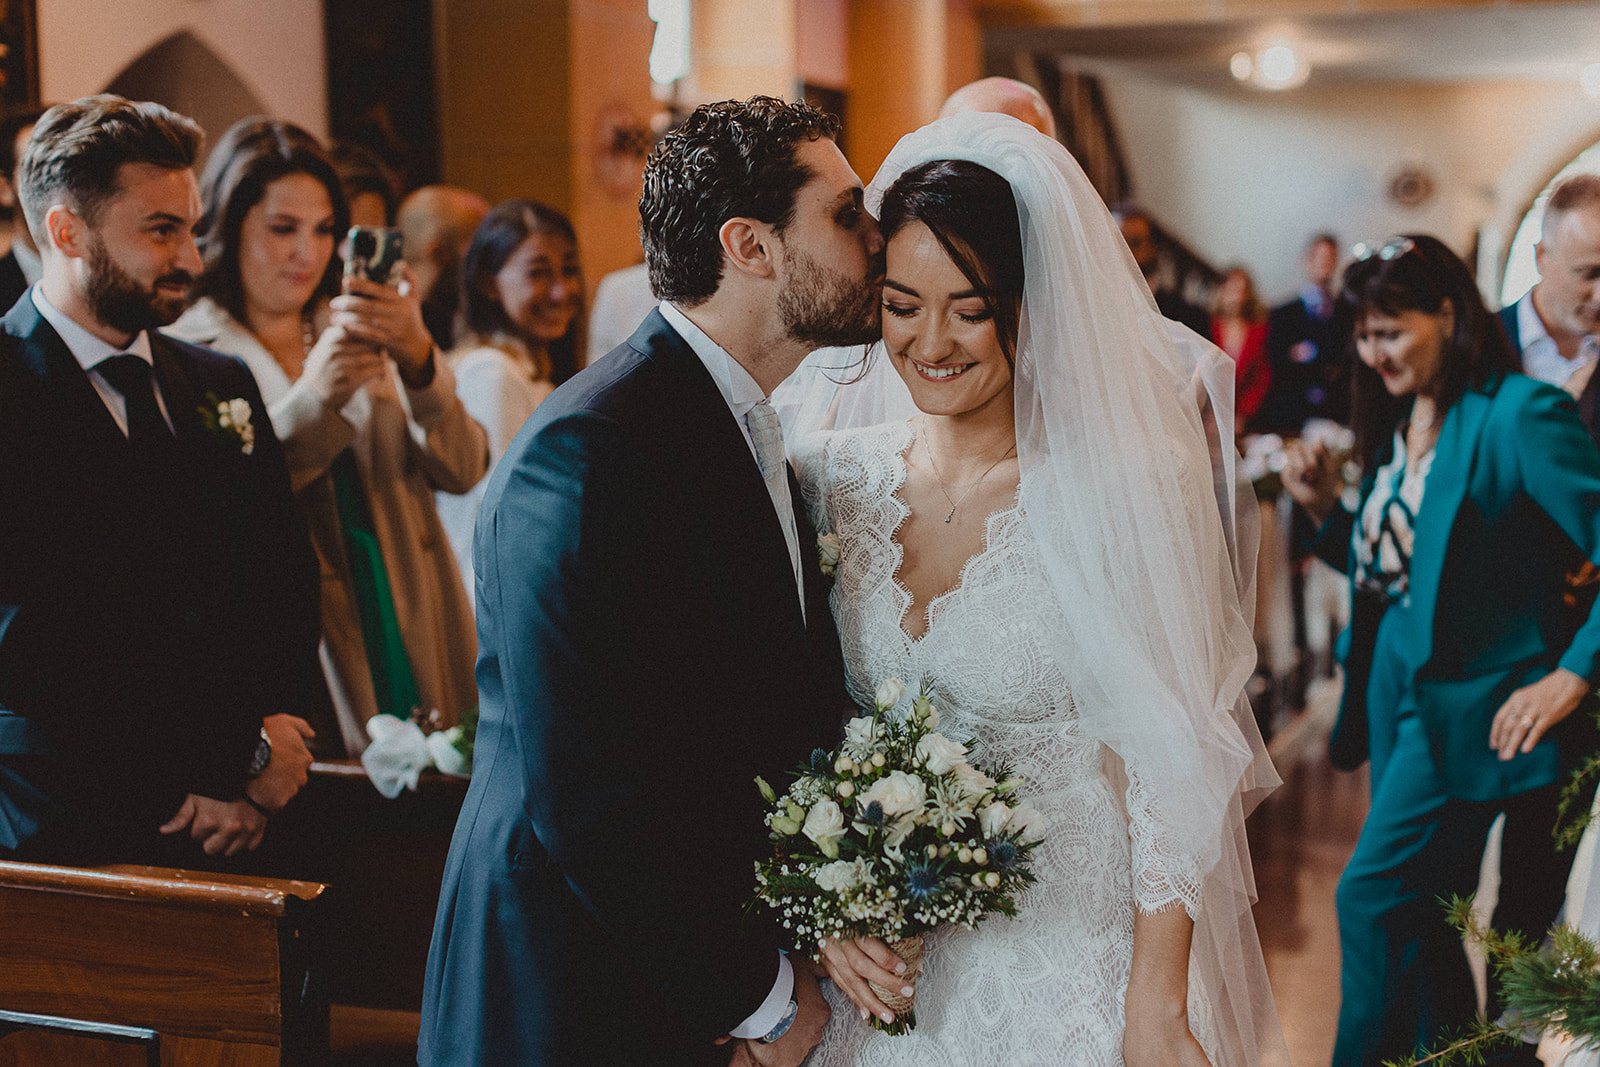 Matrimonio in Baita sulle Dolomiti. Livio Lacurre Fotografie.